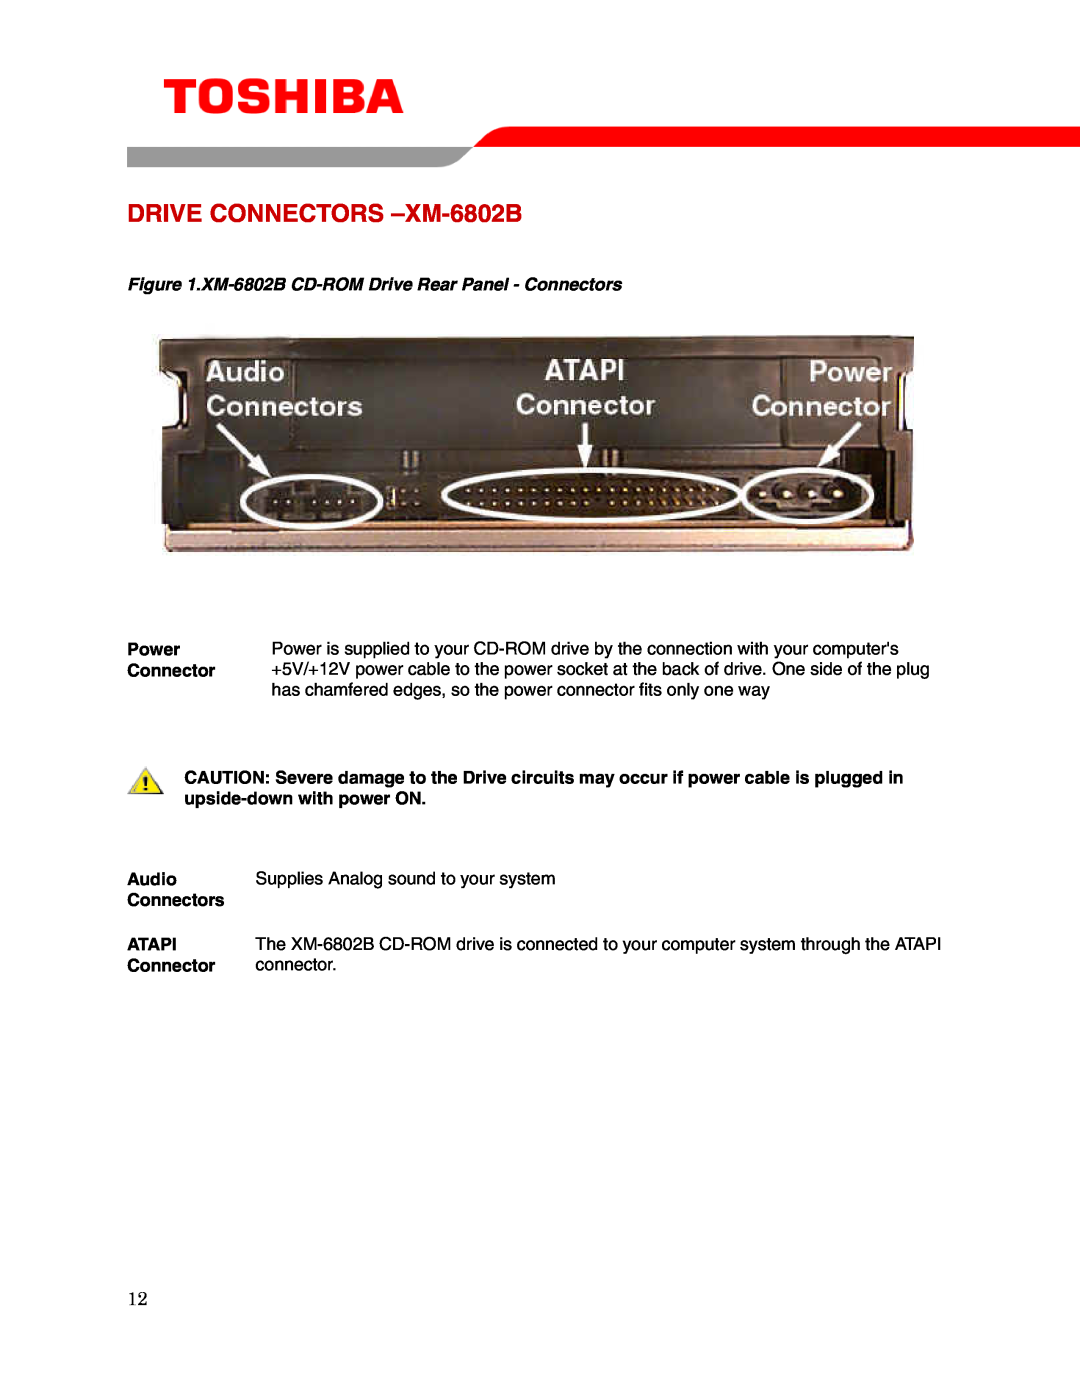 Toshiba user manual DRIVE CONNECTORS -XM-6802B, XM-6802B CD-ROM Drive Rear Panel - Connectors, Atapi, Power, Audio 